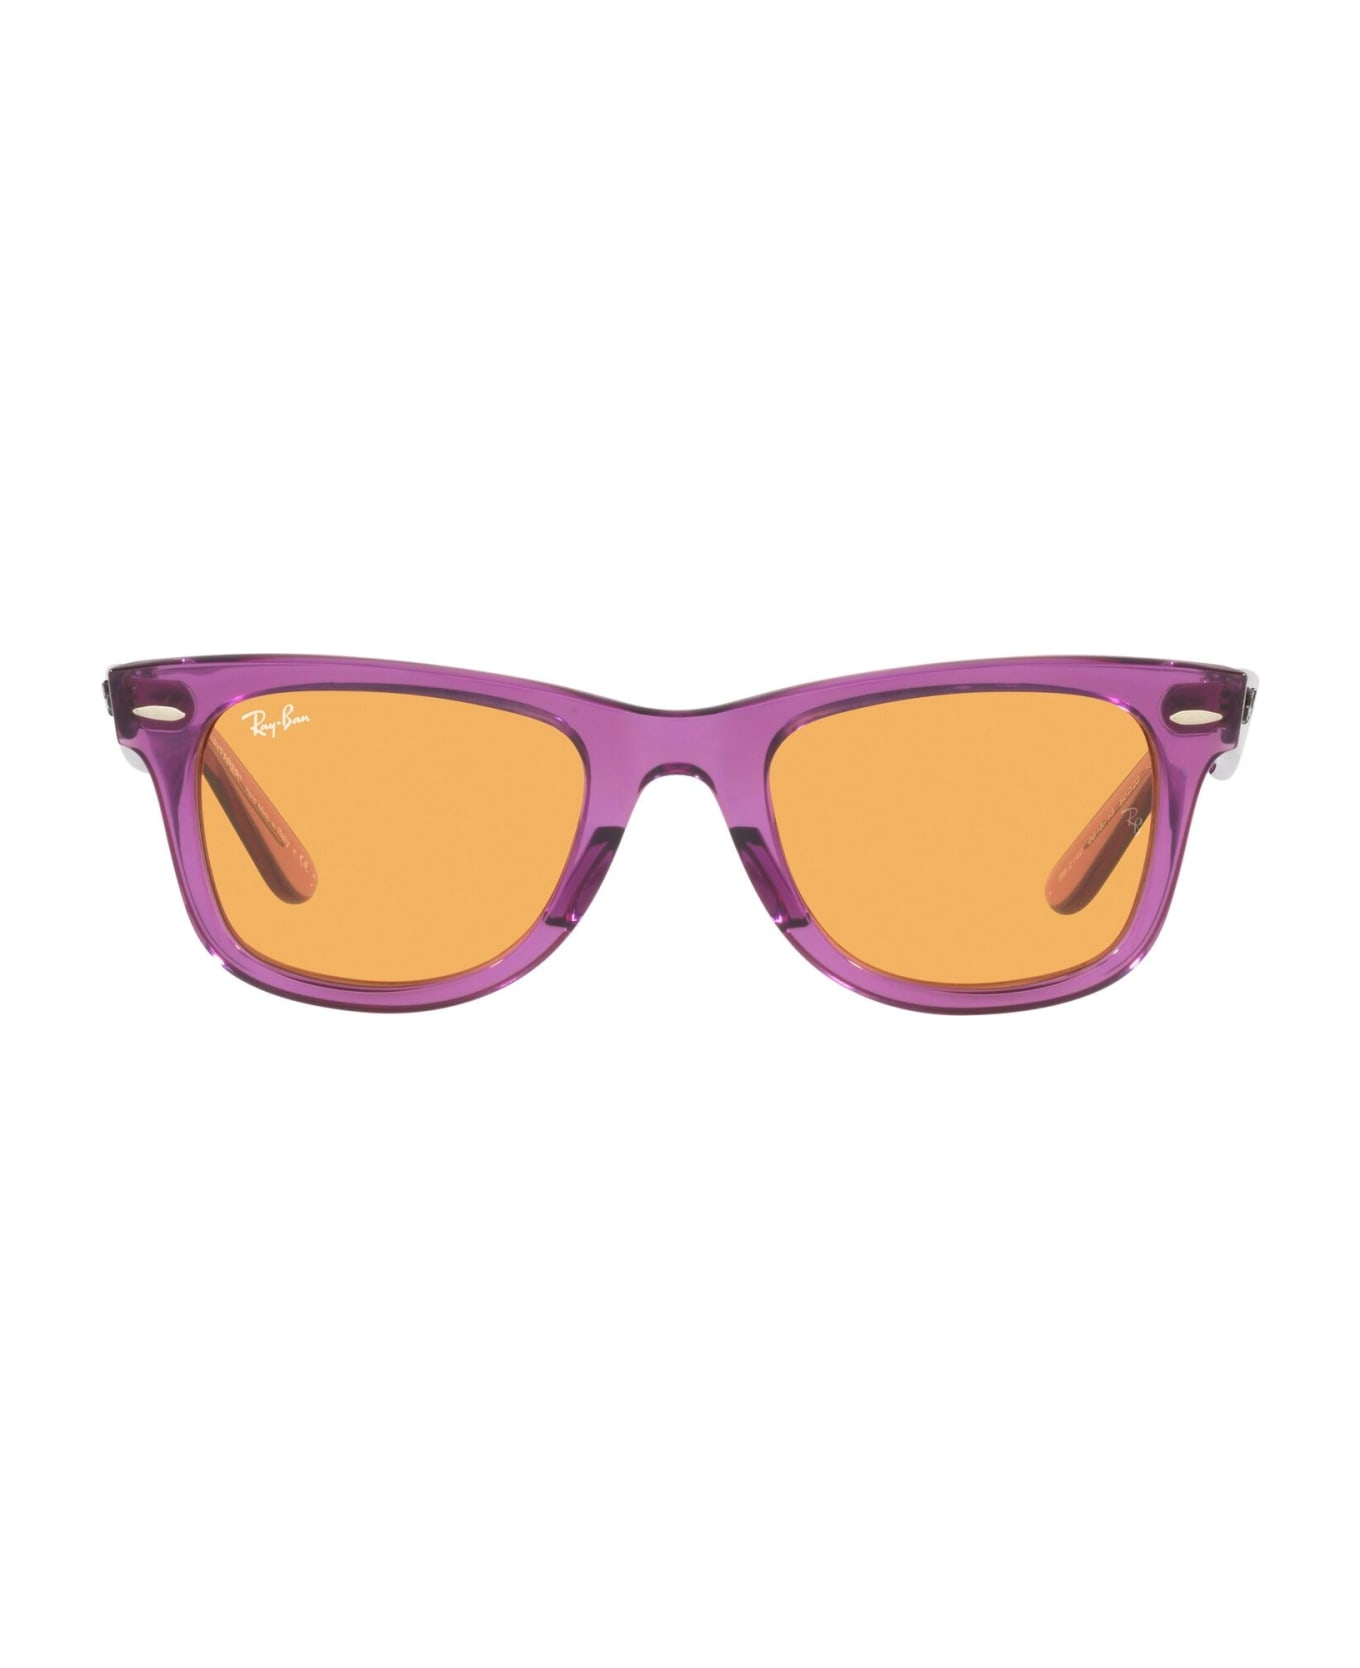 Ray-Ban Eyewear - Viola/Arancione